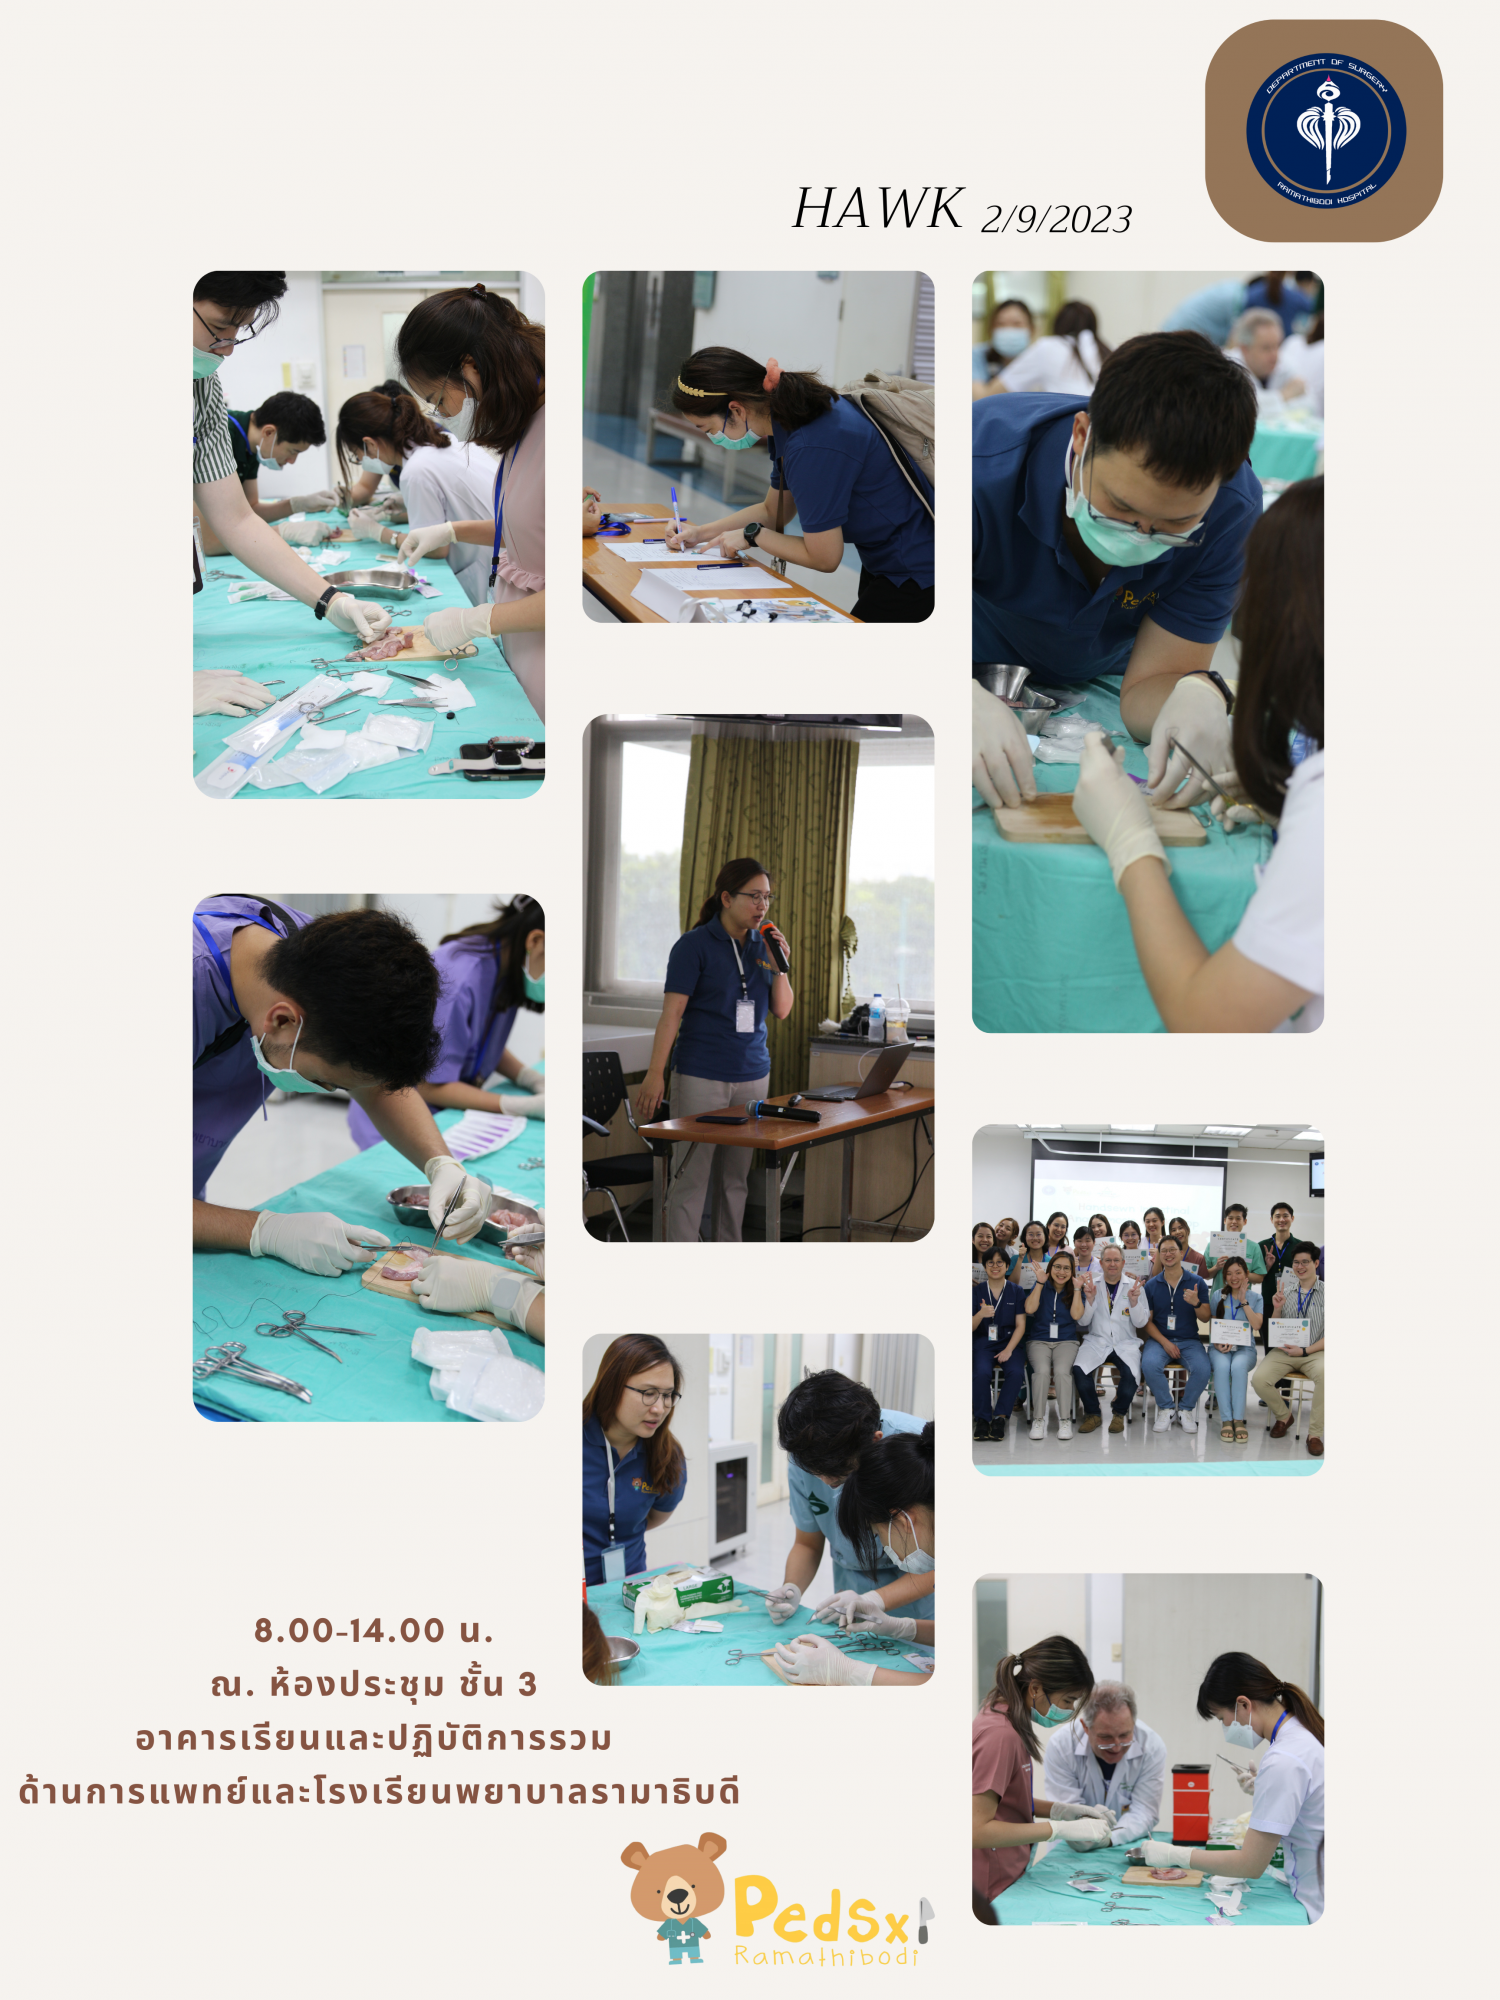 Handsewn intestinal anastomosis workshop 2023